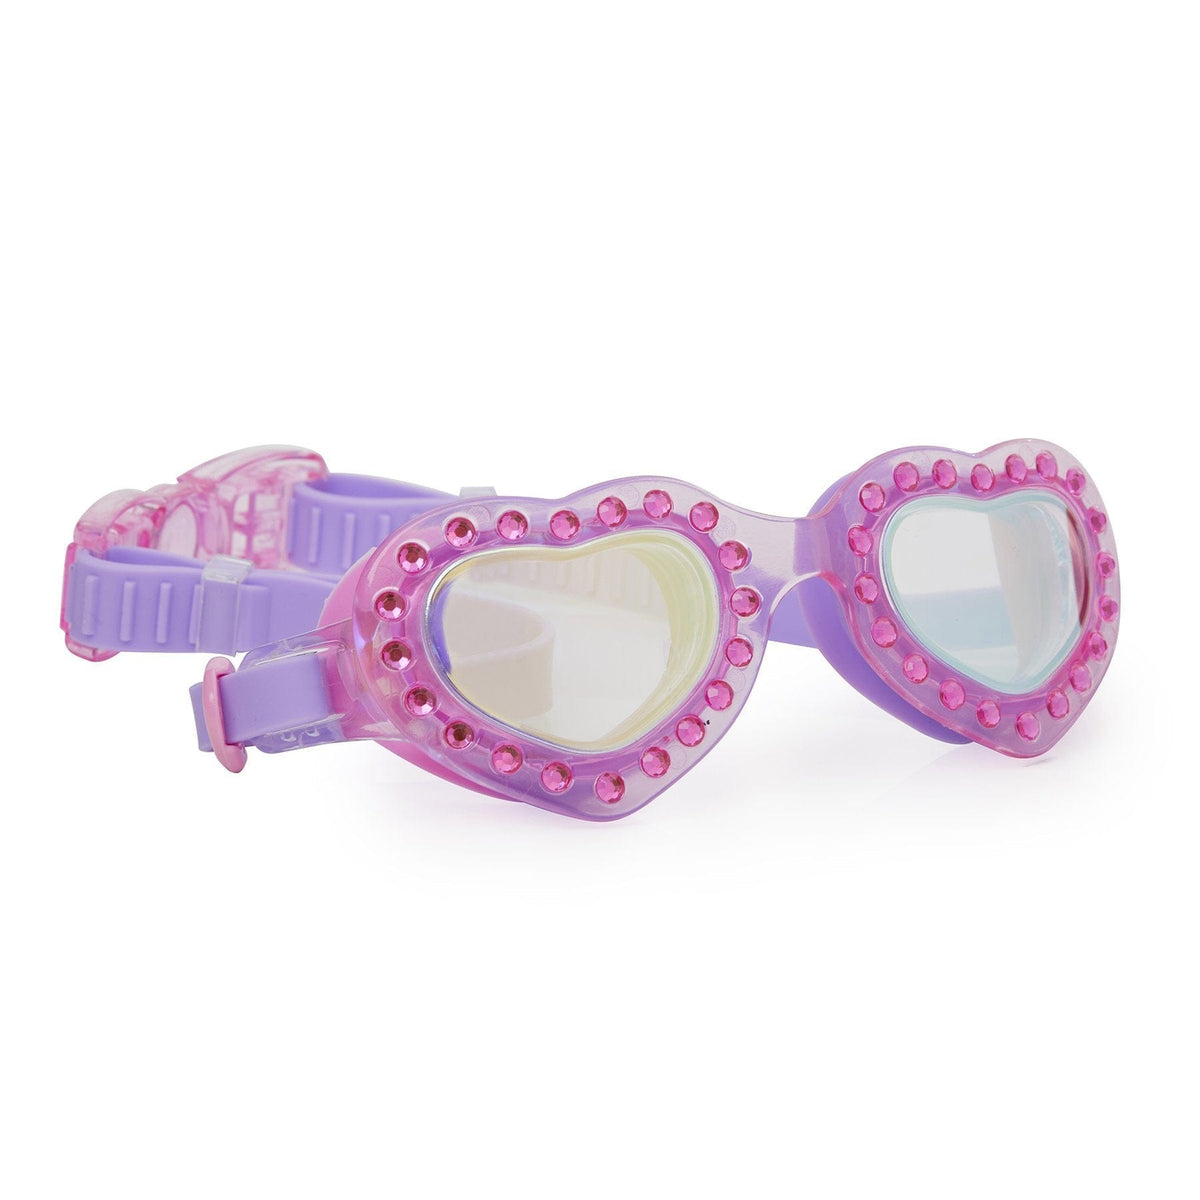 Bling2o Swim Goggles Heart Throb - First Crush Fuschia - Bling2o - Splash Swimwear  - bling2o, goggles, kids - Splash Swimwear 